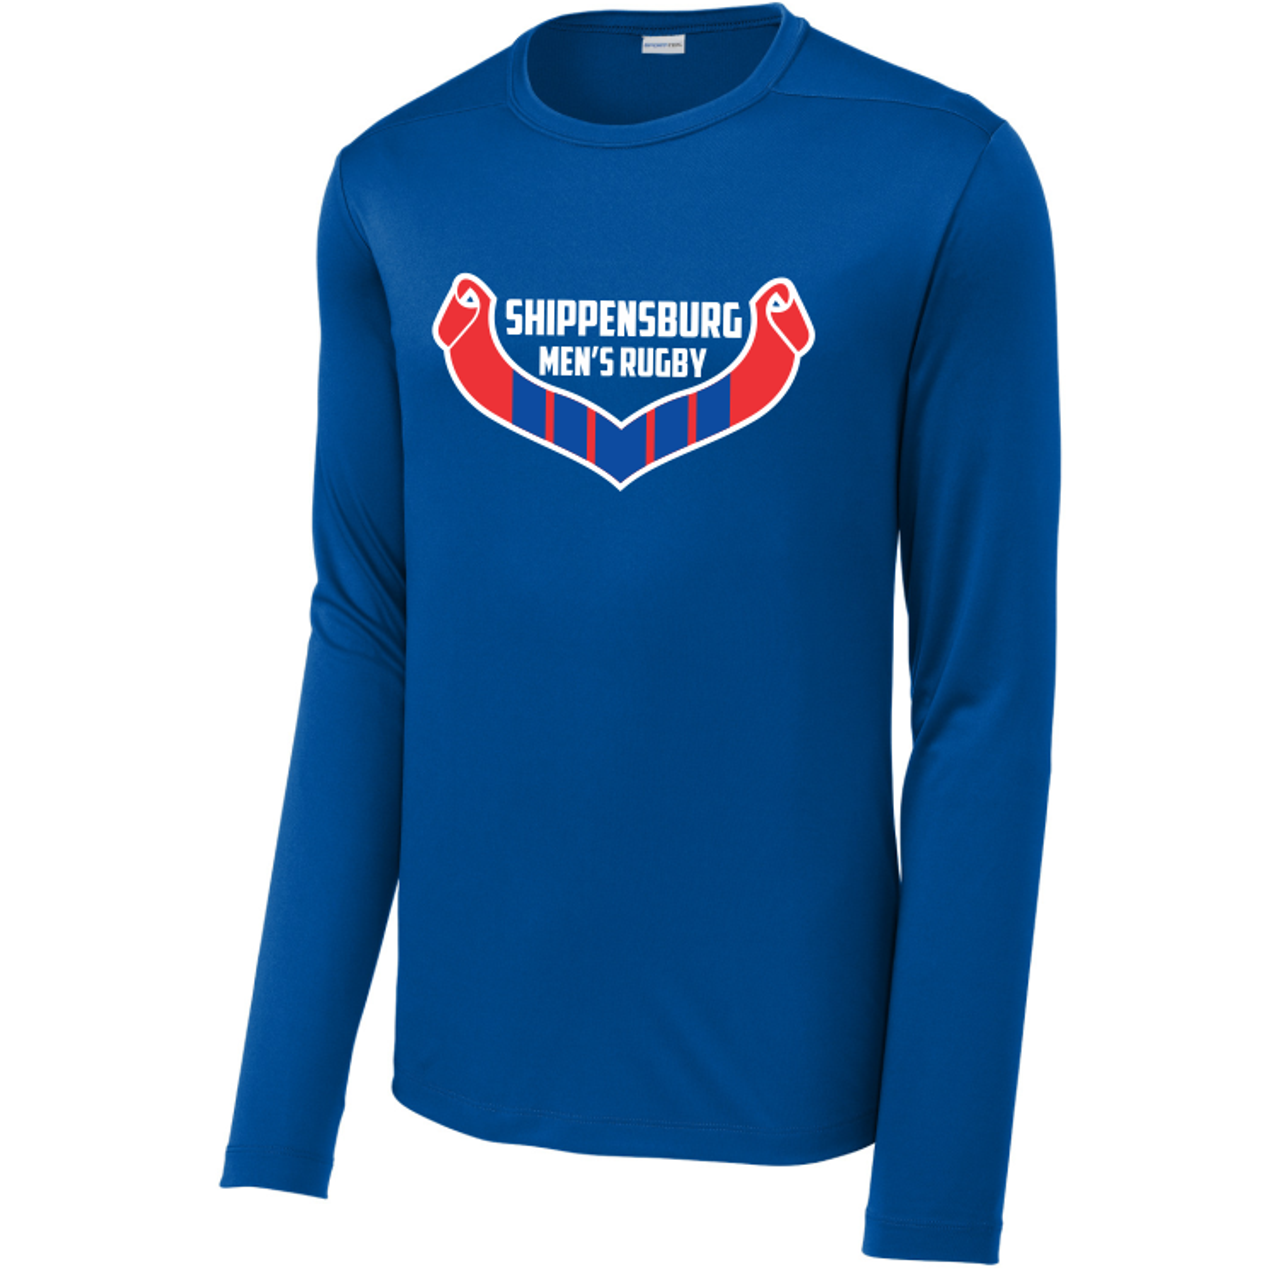 Shippensburg RFC Performance Fabric T-Shirt, Royal